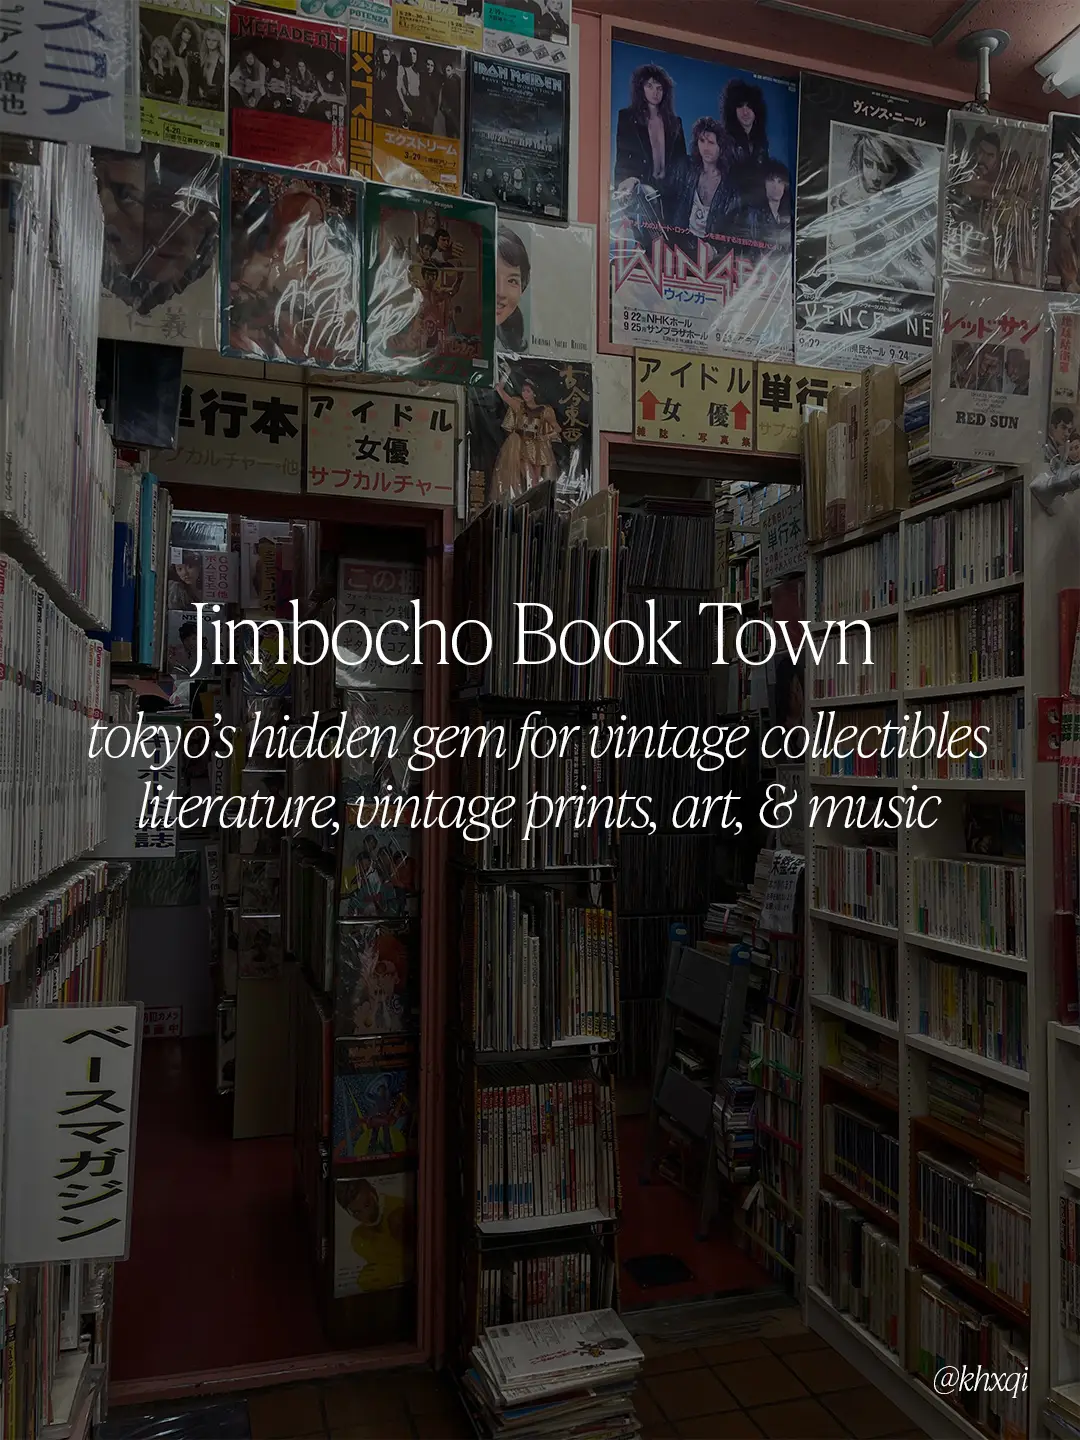 tokyo’s hidden gem — jimbocho book town 🕰's images(0)